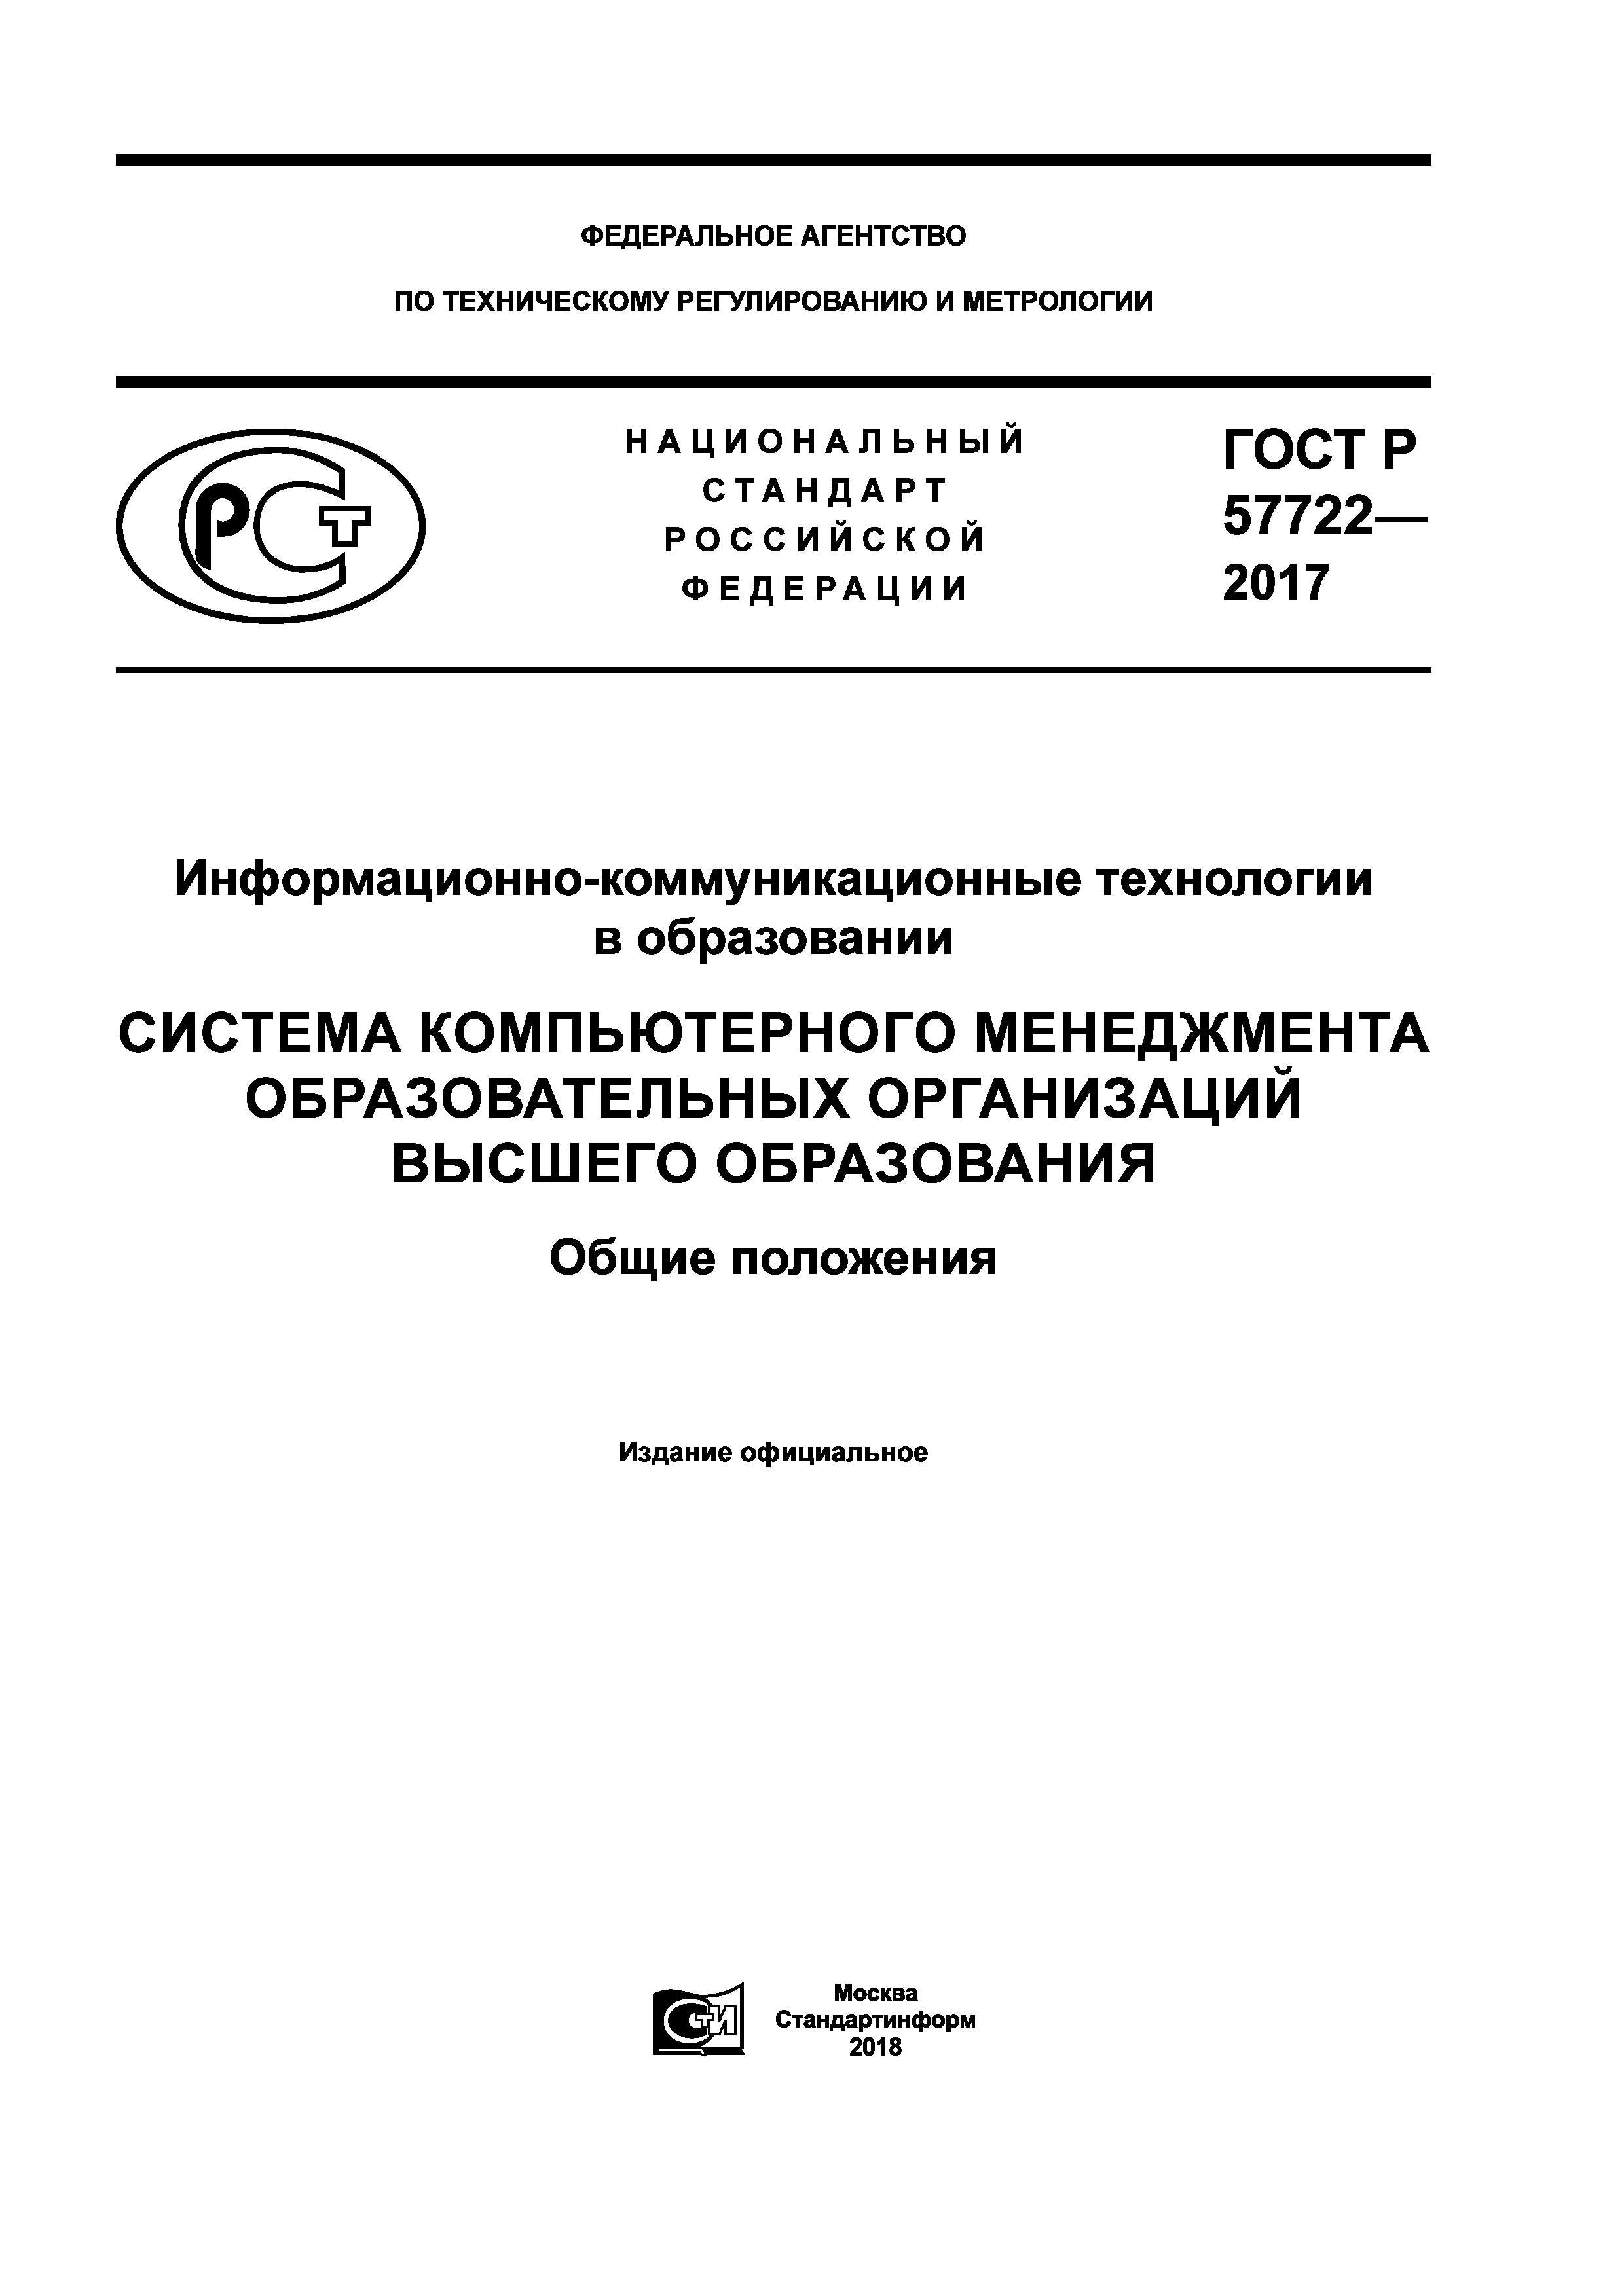 ГОСТ Р 57722-2017